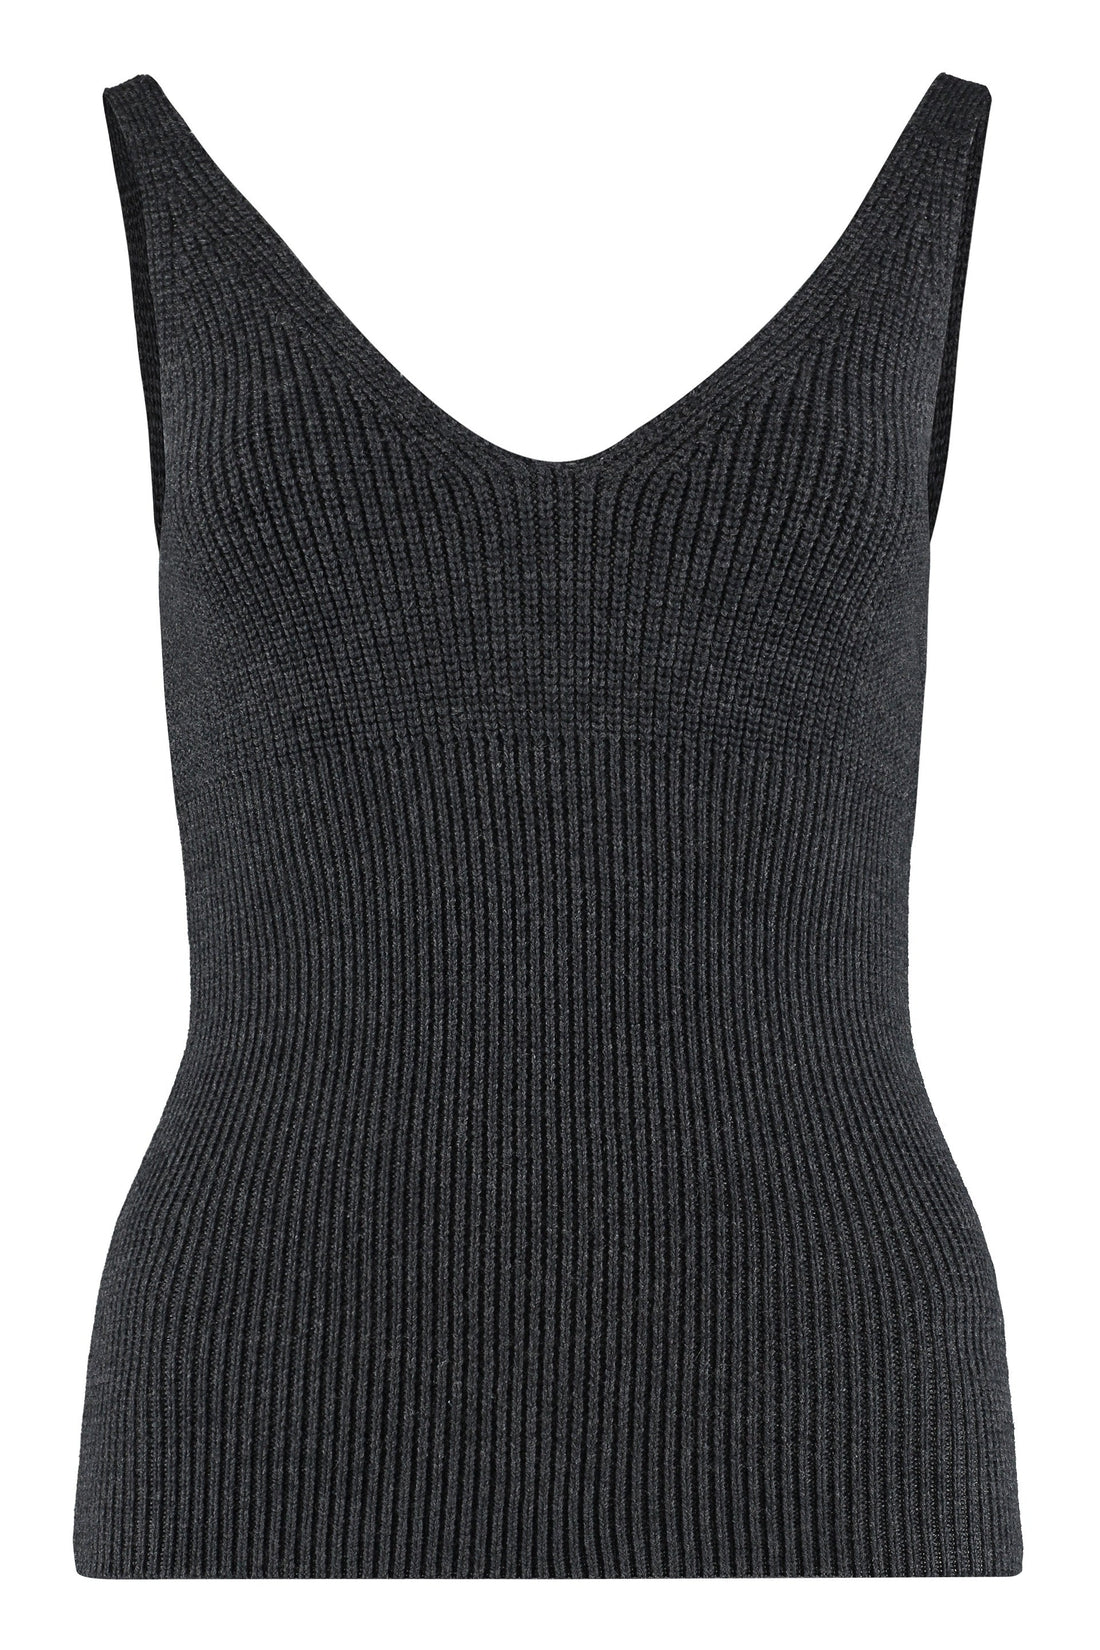 Parosh-OUTLET-SALE-Lapis knitted top-ARCHIVIST